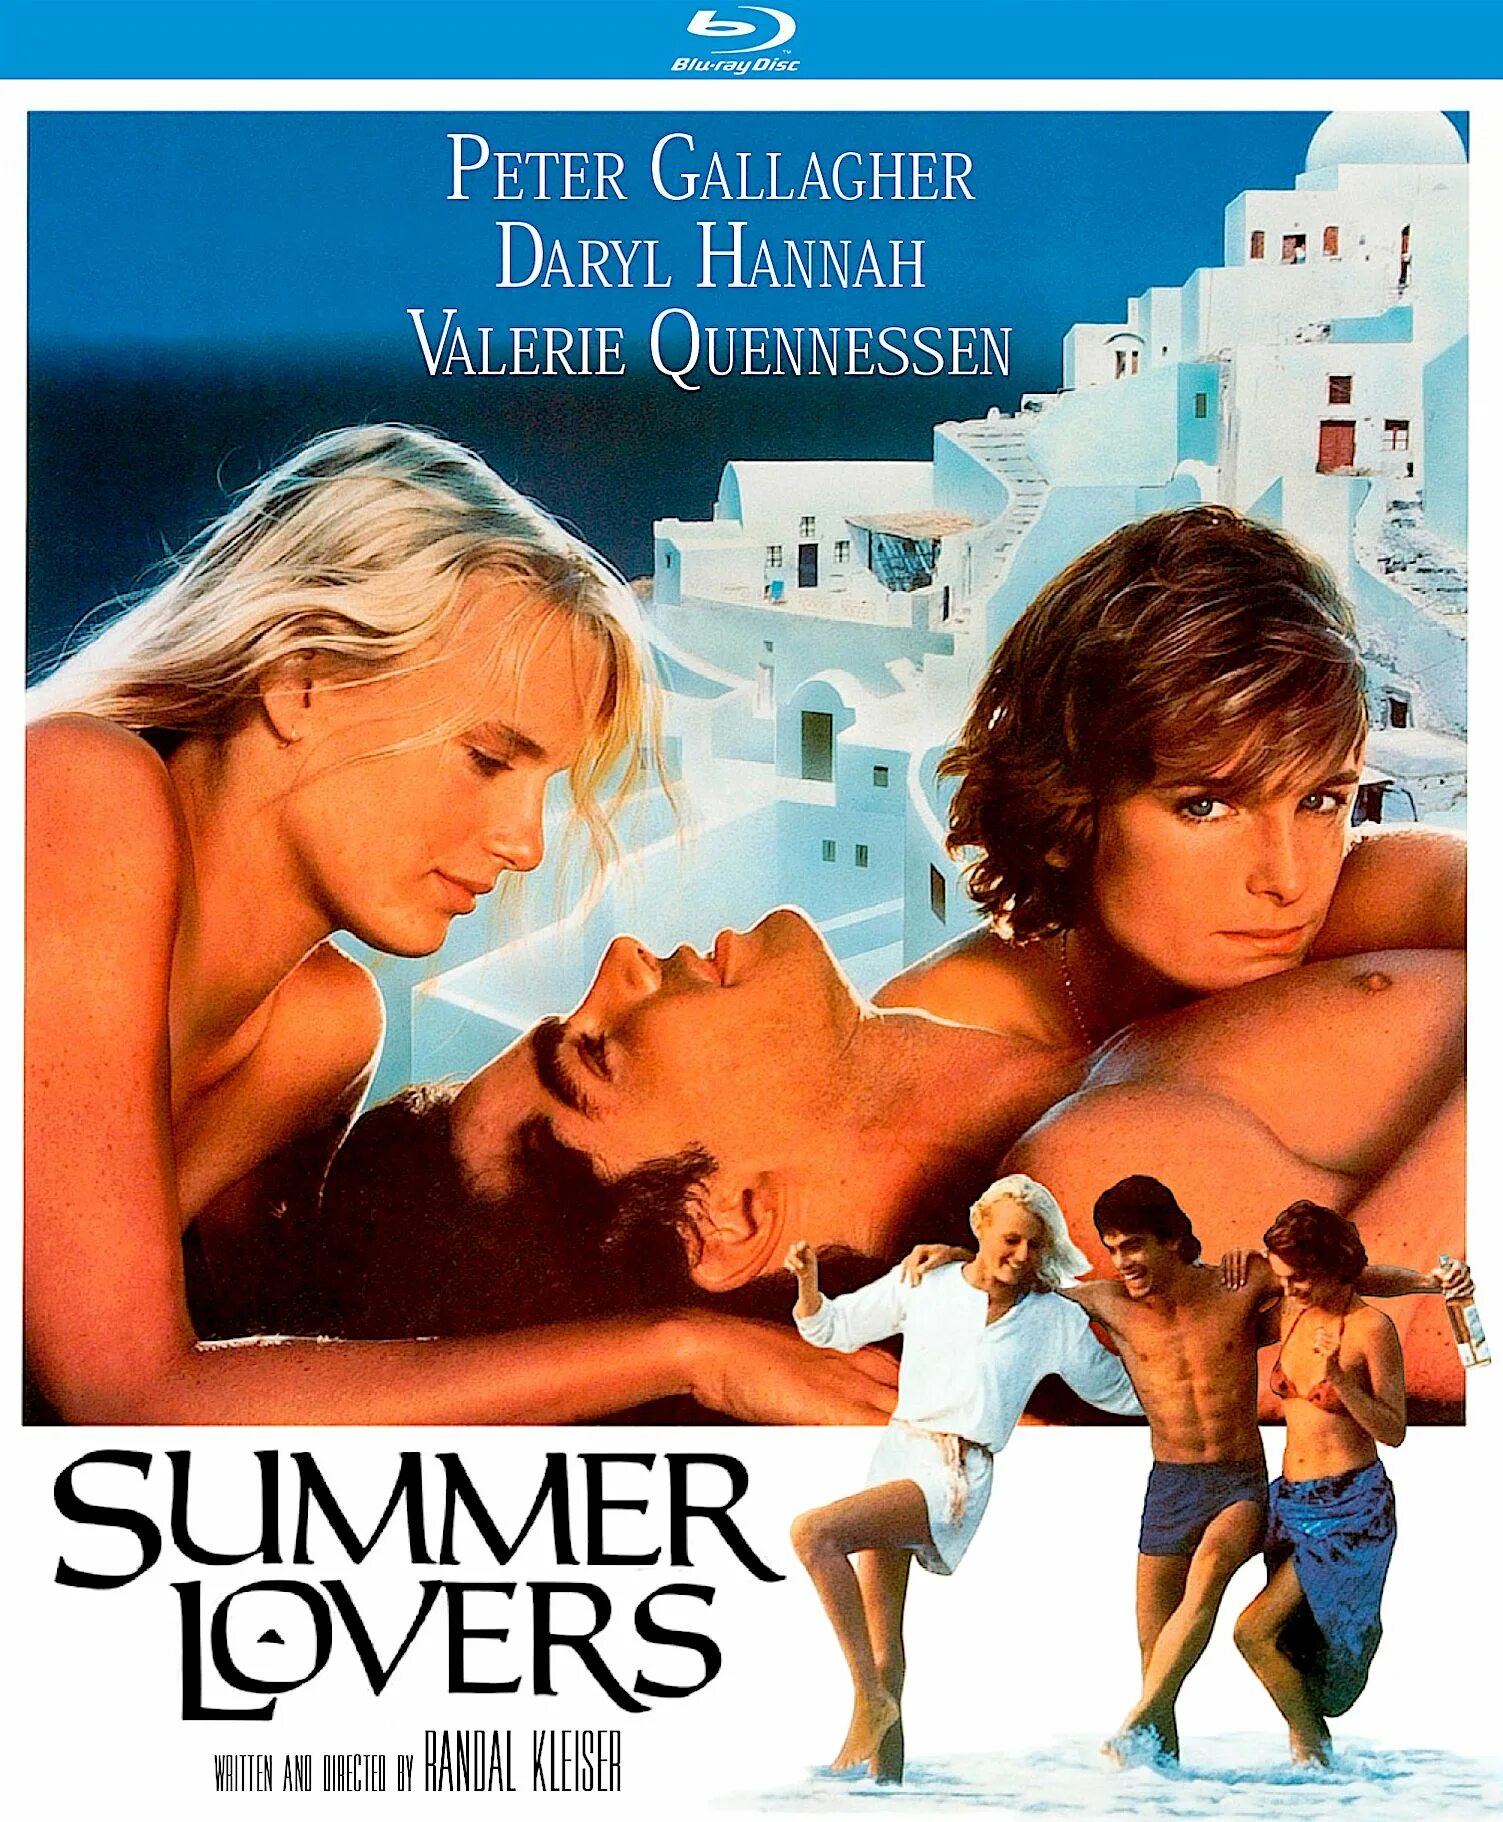 Summer threesome. Валери Кеннессен. Лето втроем 1982. Постер Summer lovers 1982.